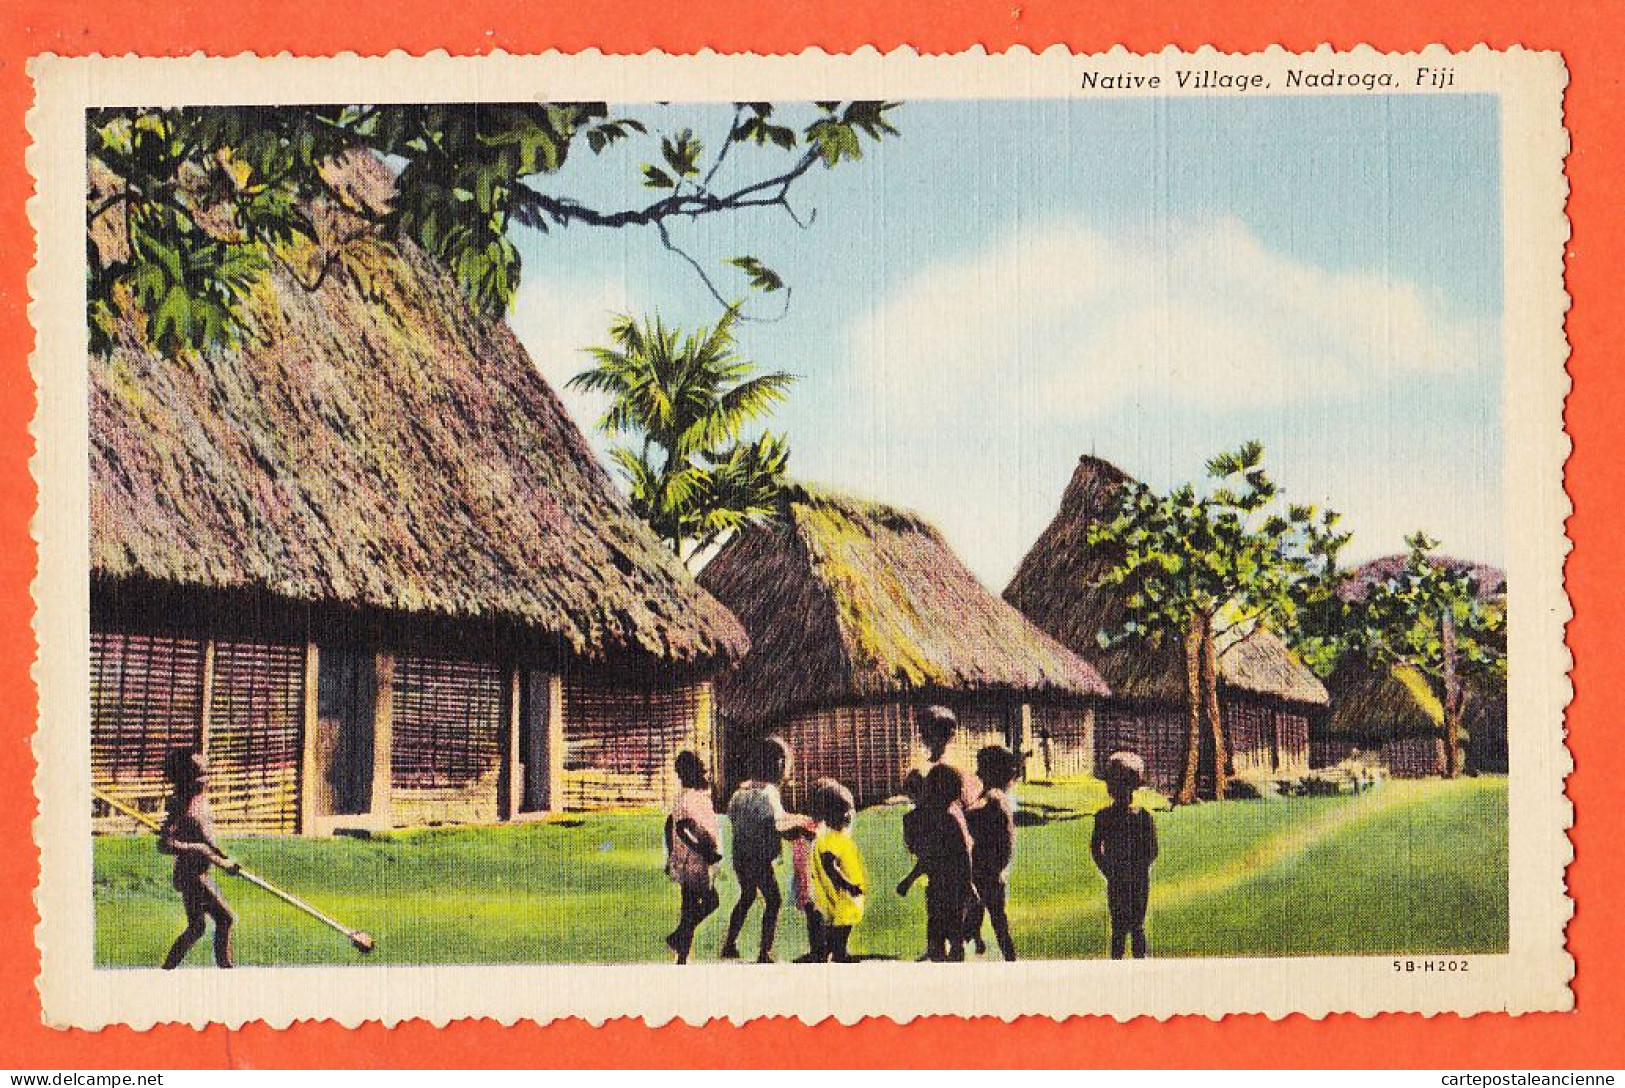 08098 ● ● NADROGA Fiji Native Village 1930s Fidji 5B-H202 - Fiji